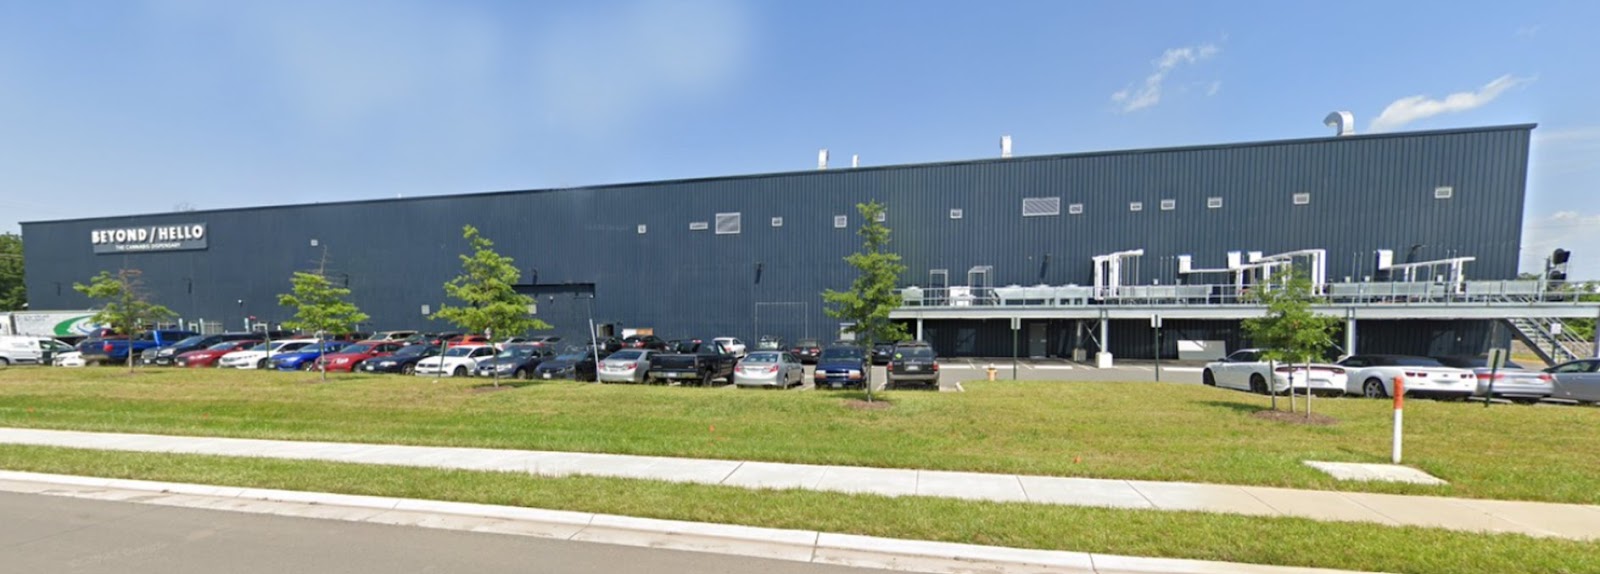 Dalitso Cannabis Processing Facility, Manassas, VA - West Virginia Pre-Engineered Steel Buildings | Prefab Metal Building FAQ